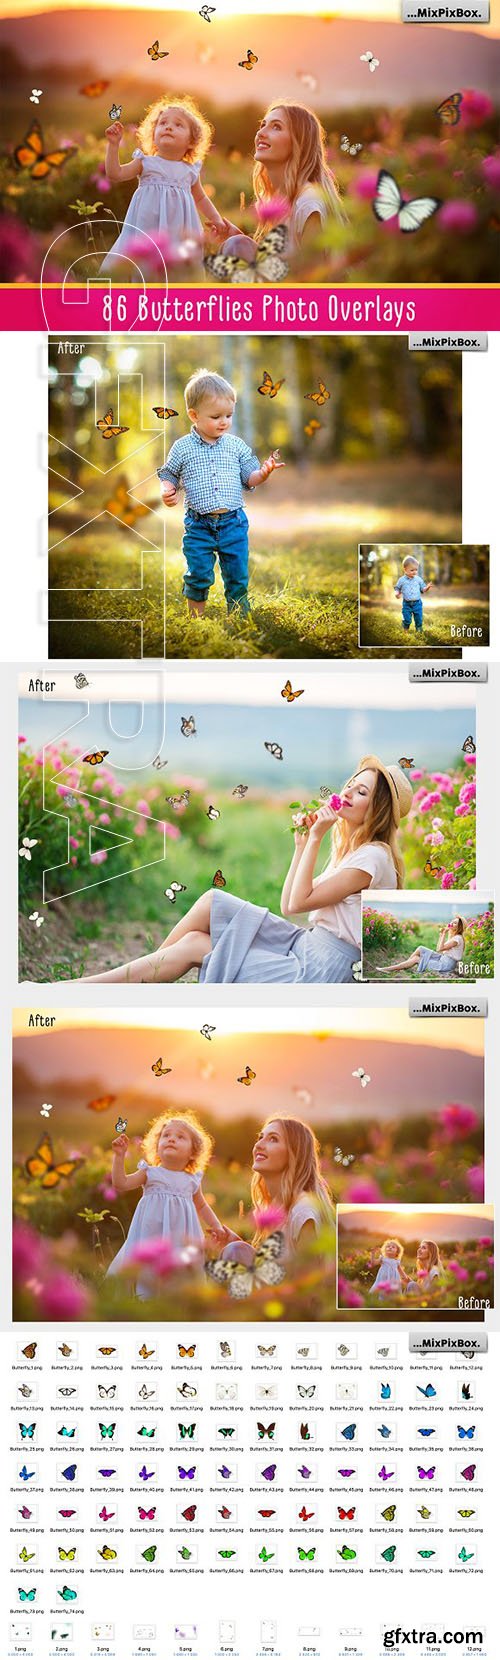 Butterflies Photo Overlays